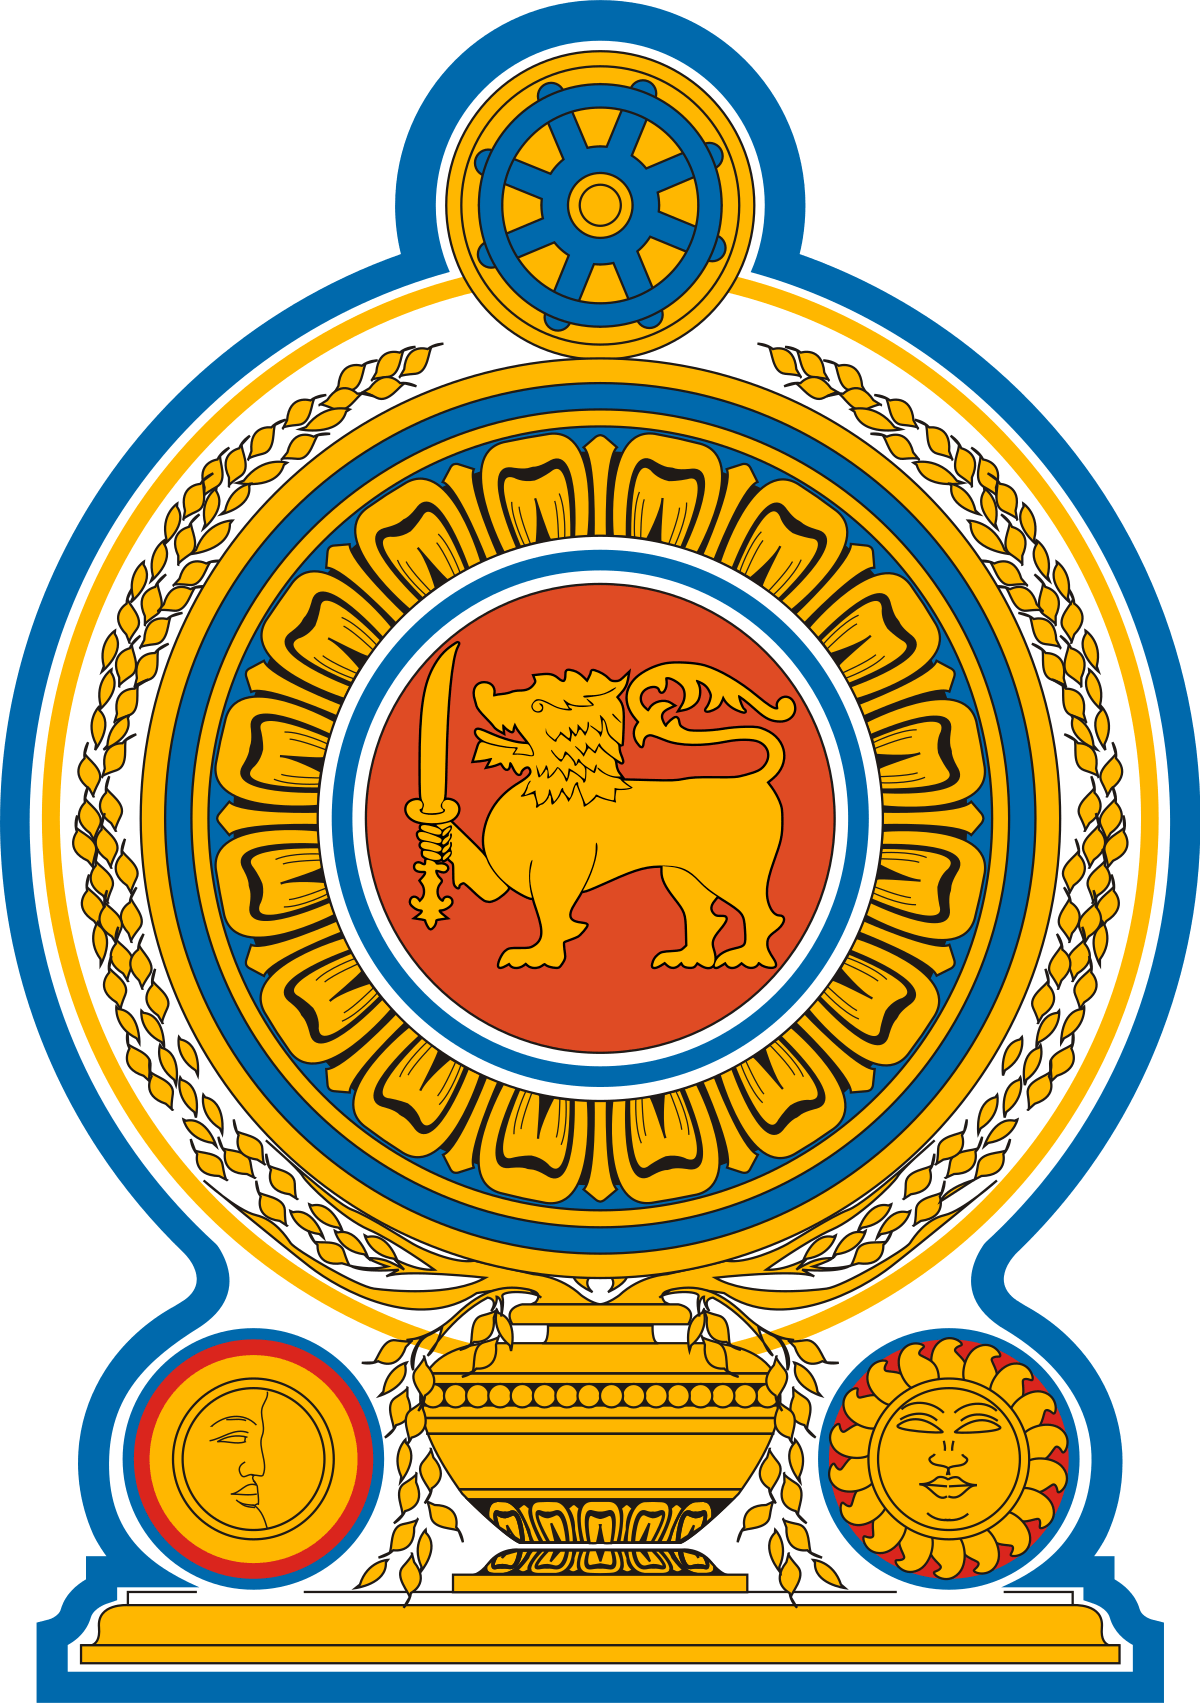 Government Logo - Emblem of Sri Lanka